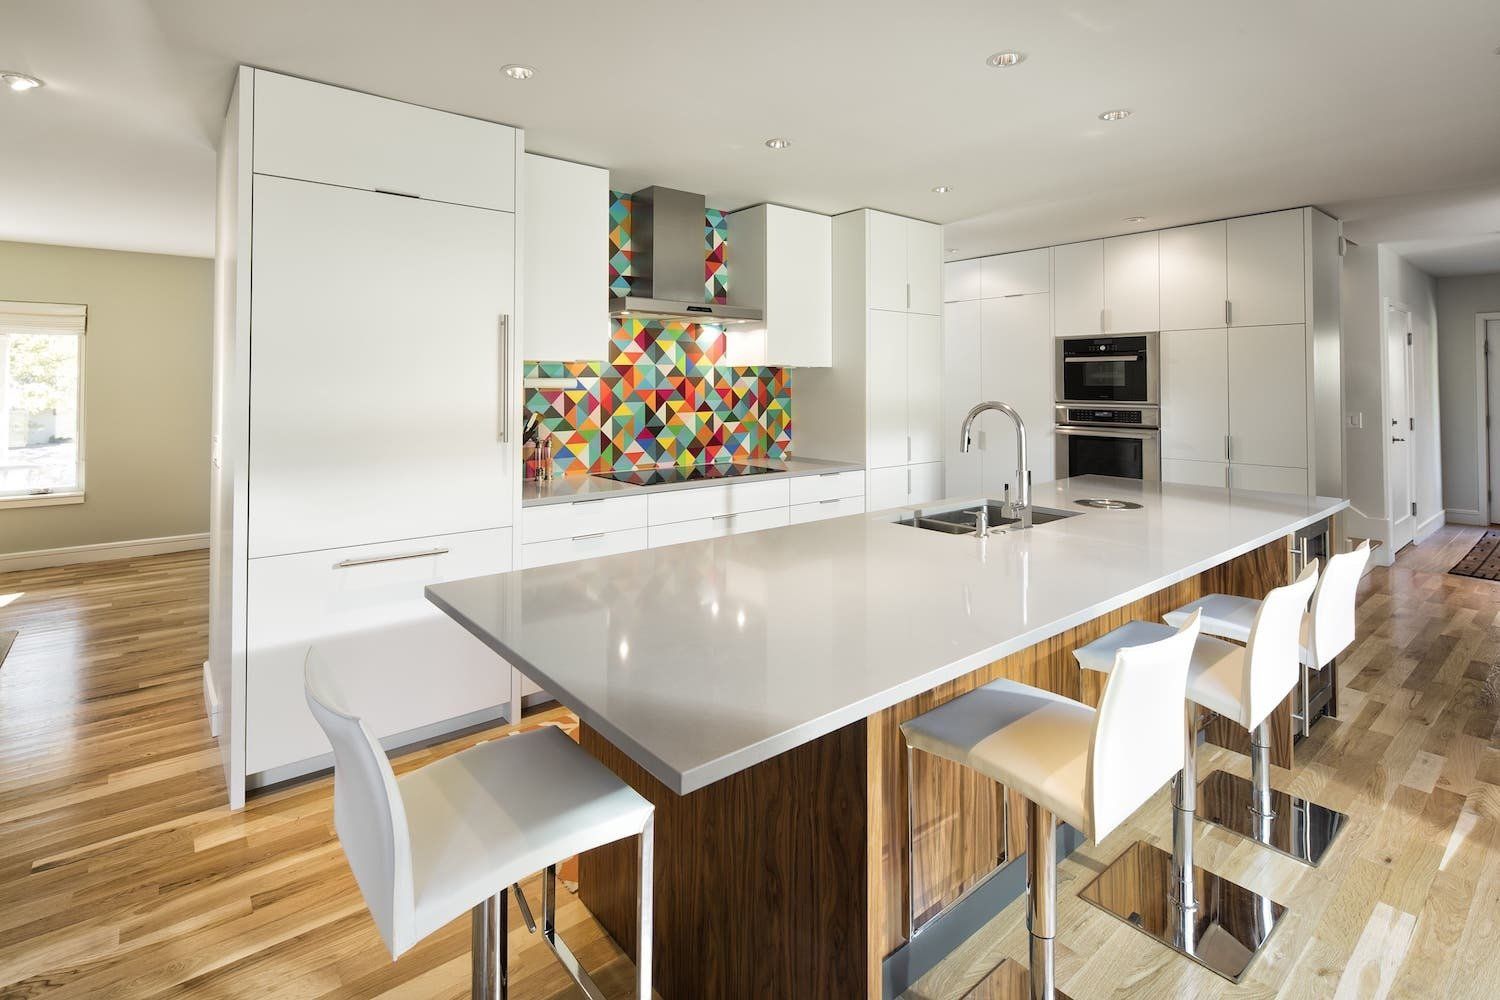 Modern kitchen with large island and colorful backsplash.